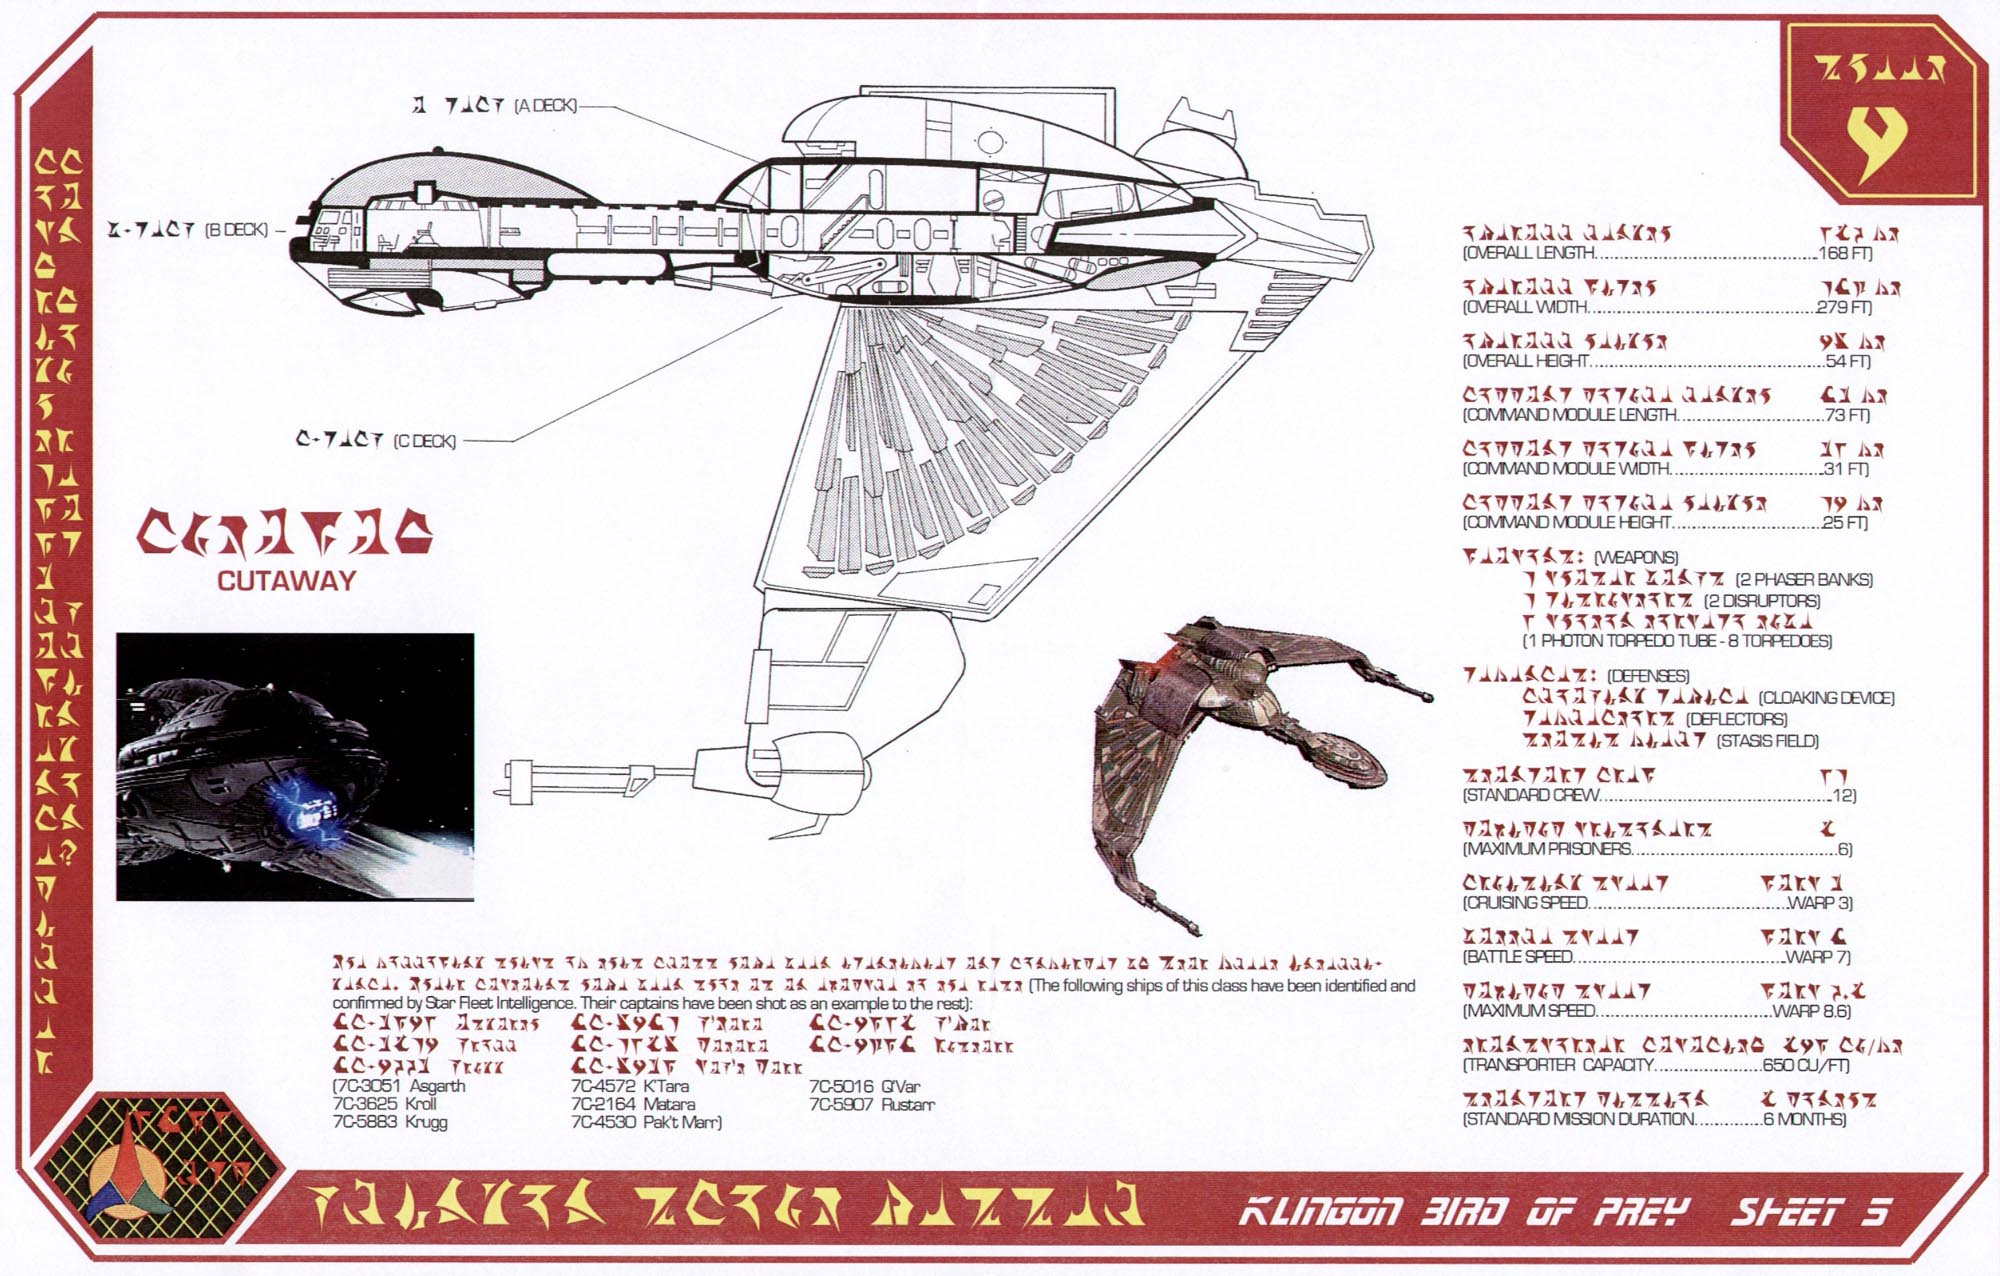 klingon-bird-of-prey-sheet-5.jpg